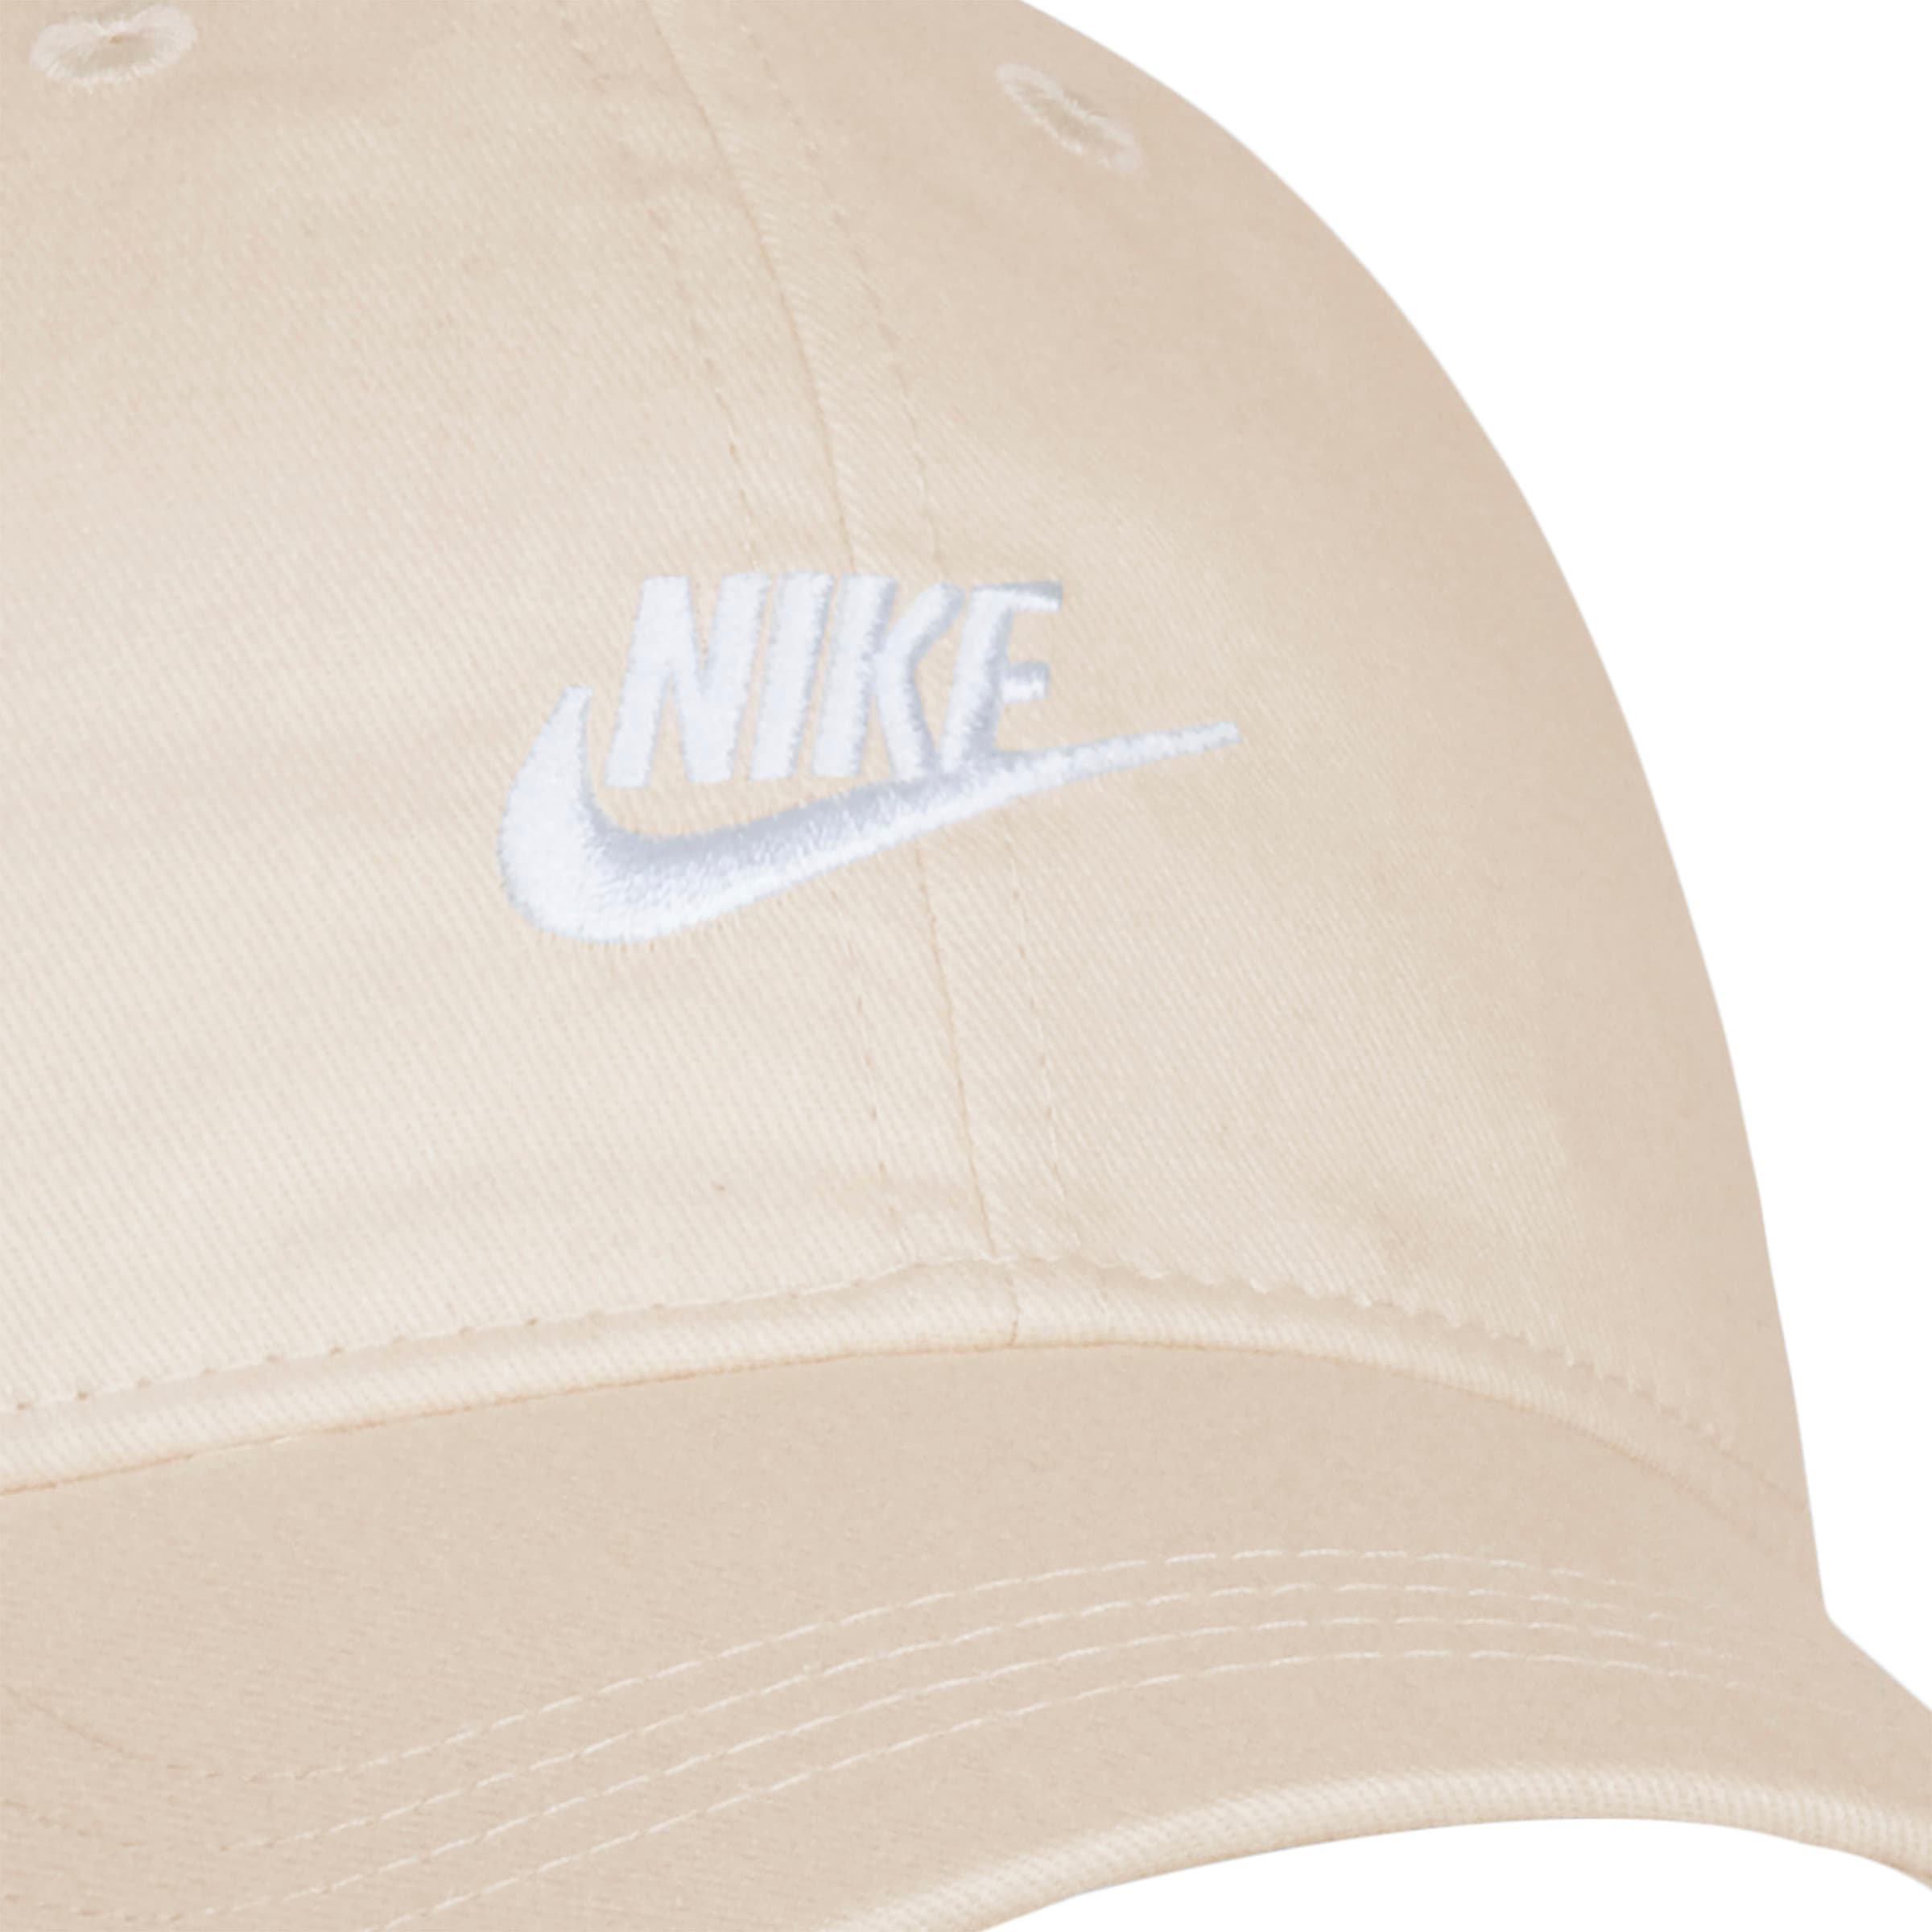 Nike Sportswear Baseball Cap »für Kids«